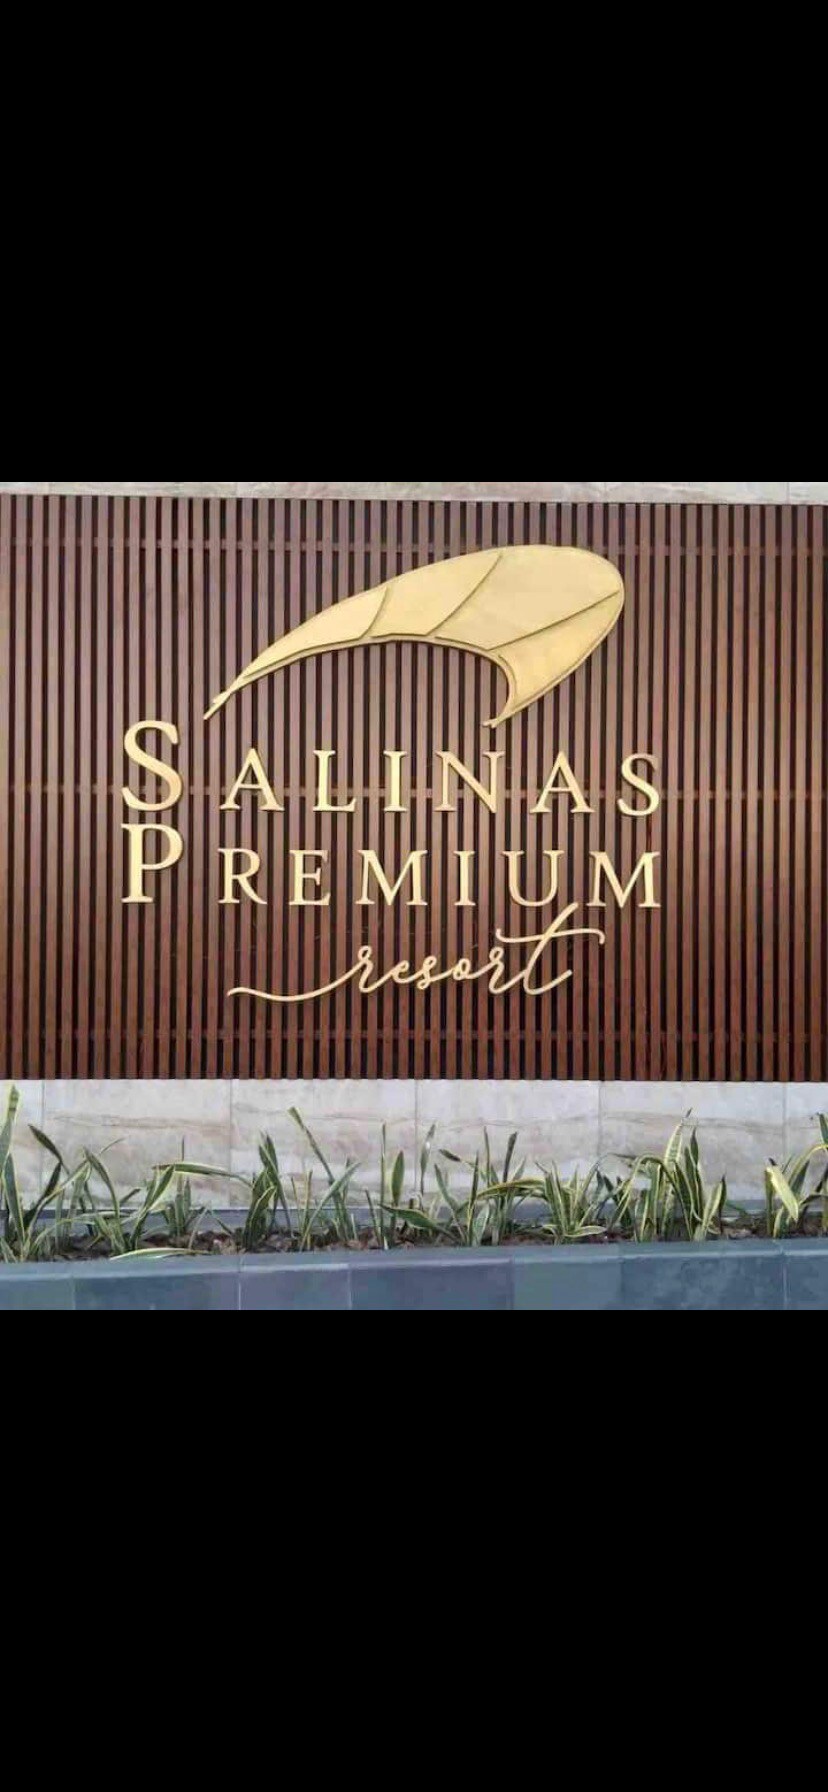 Salinas Park Resort